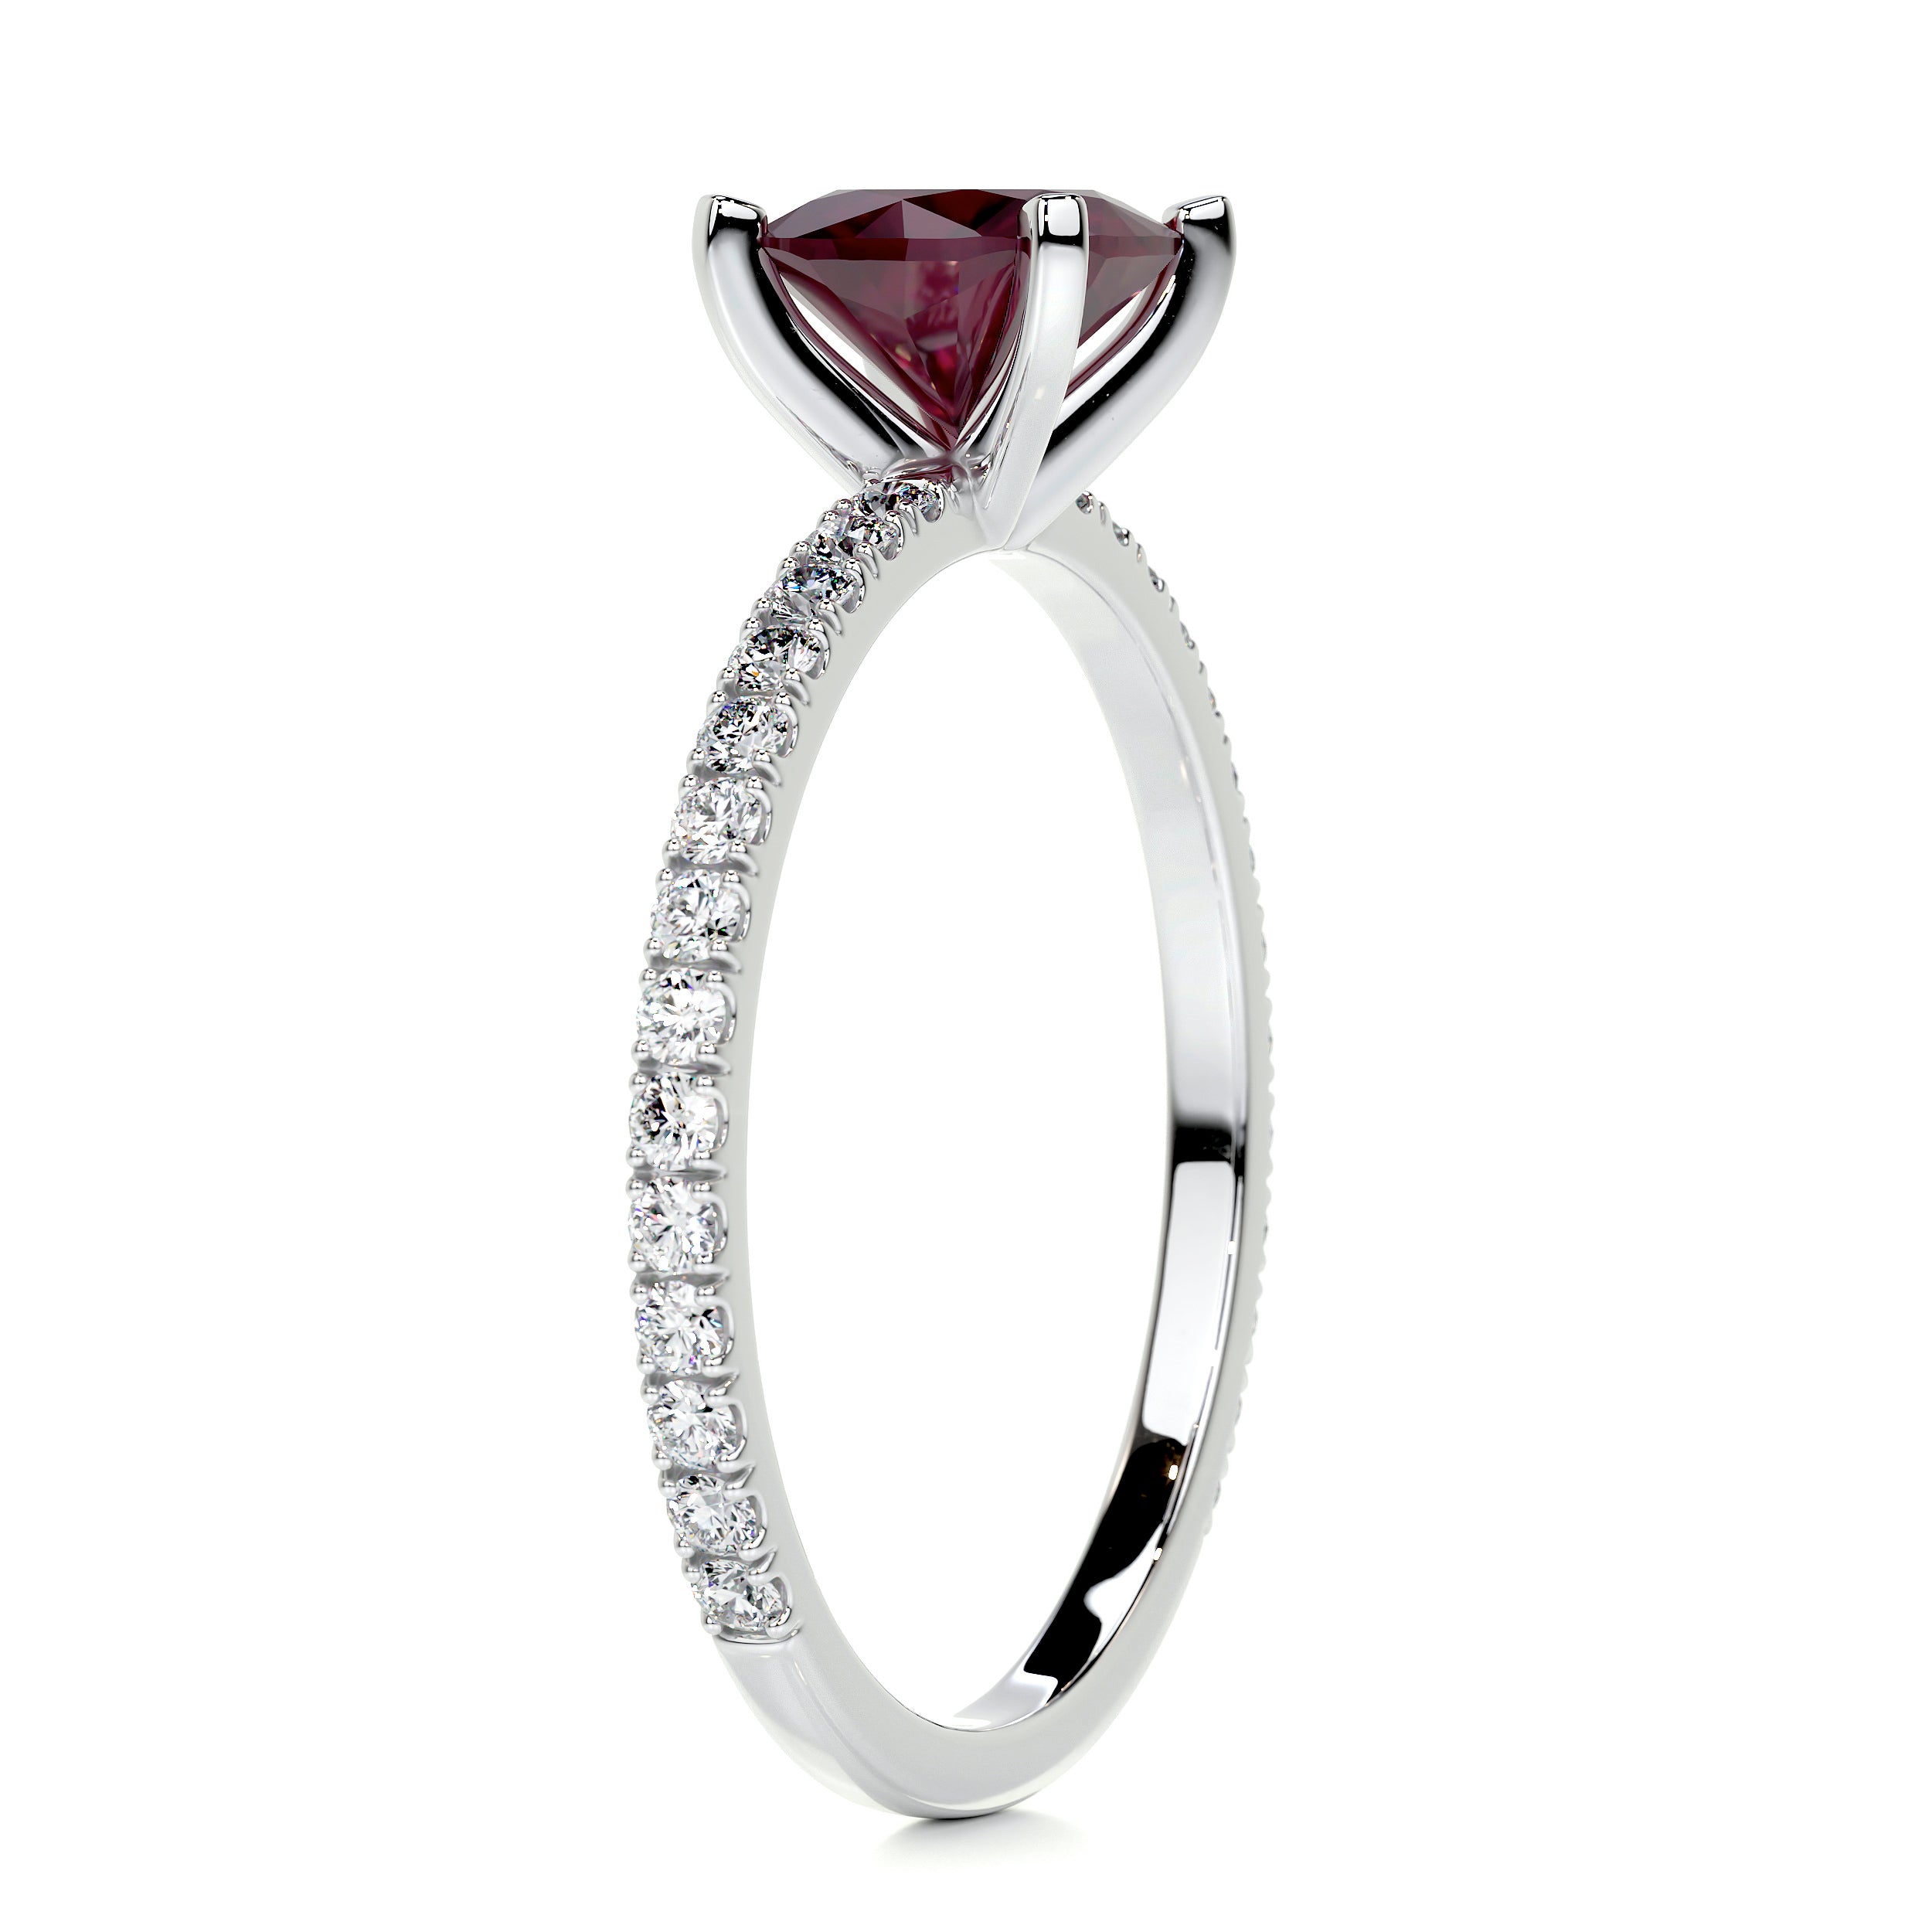 Stephanie Gemstone & Diamonds Ring   (1.8 Carat) -Platinum